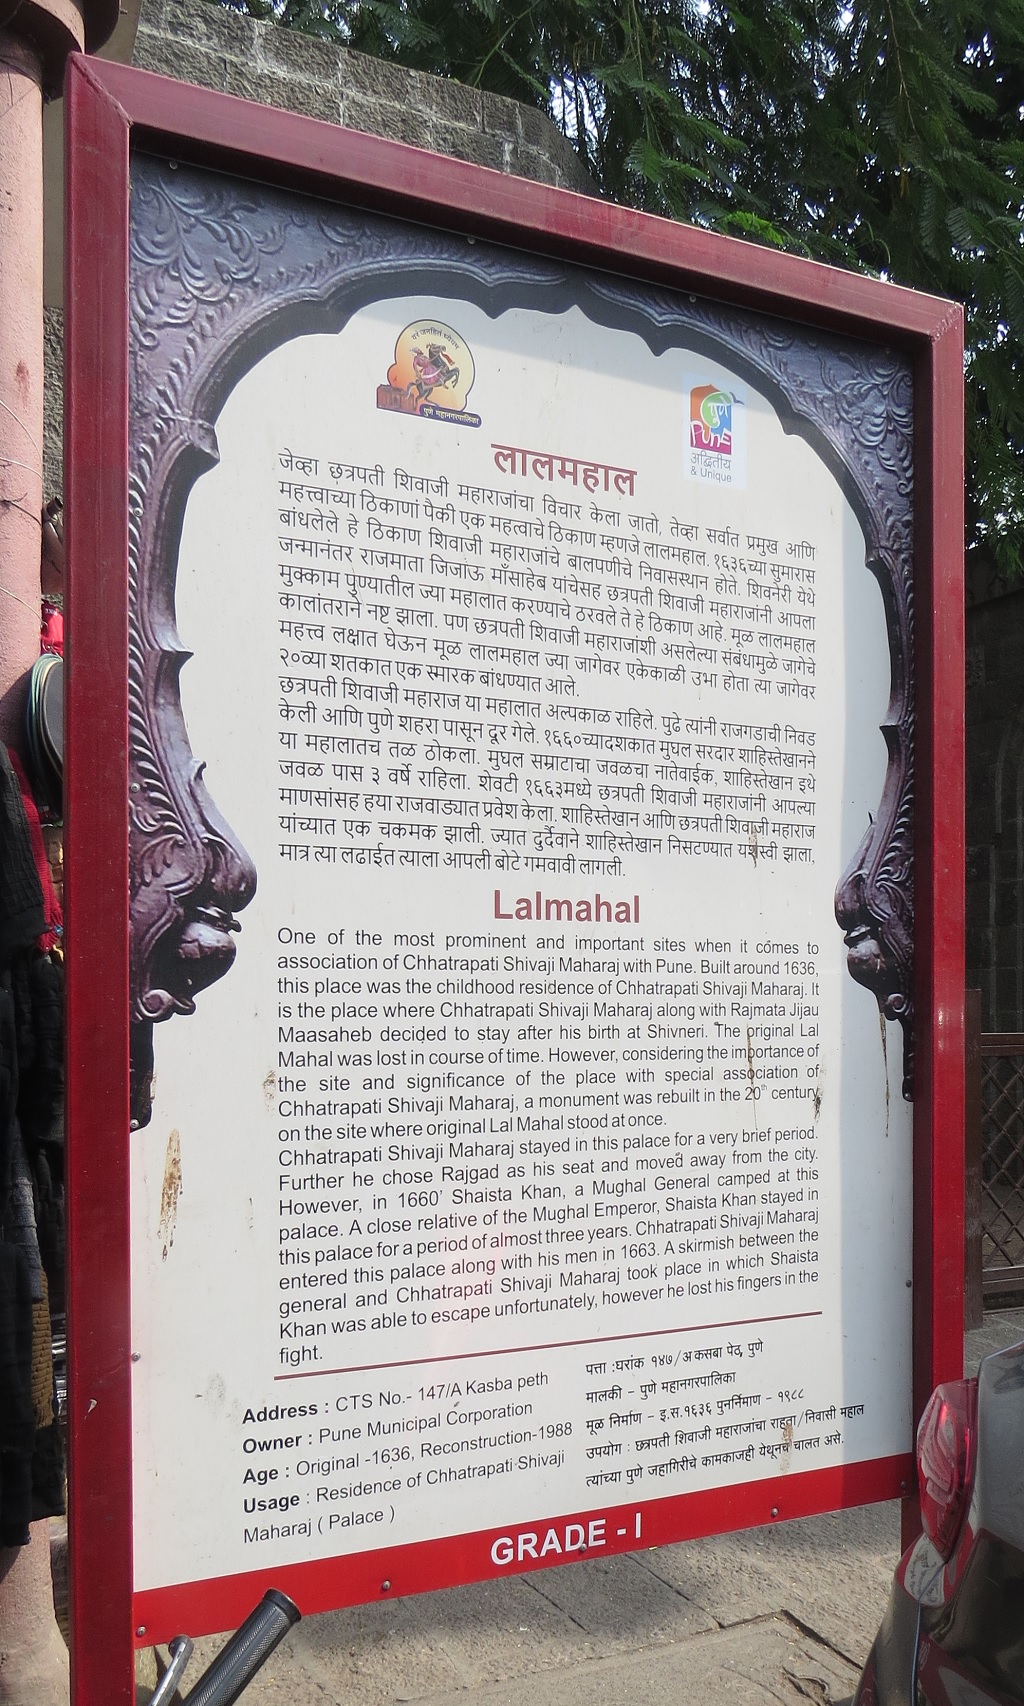 About: Lal Mahal – Residence of Chhatrapati Shivaji Maharaj